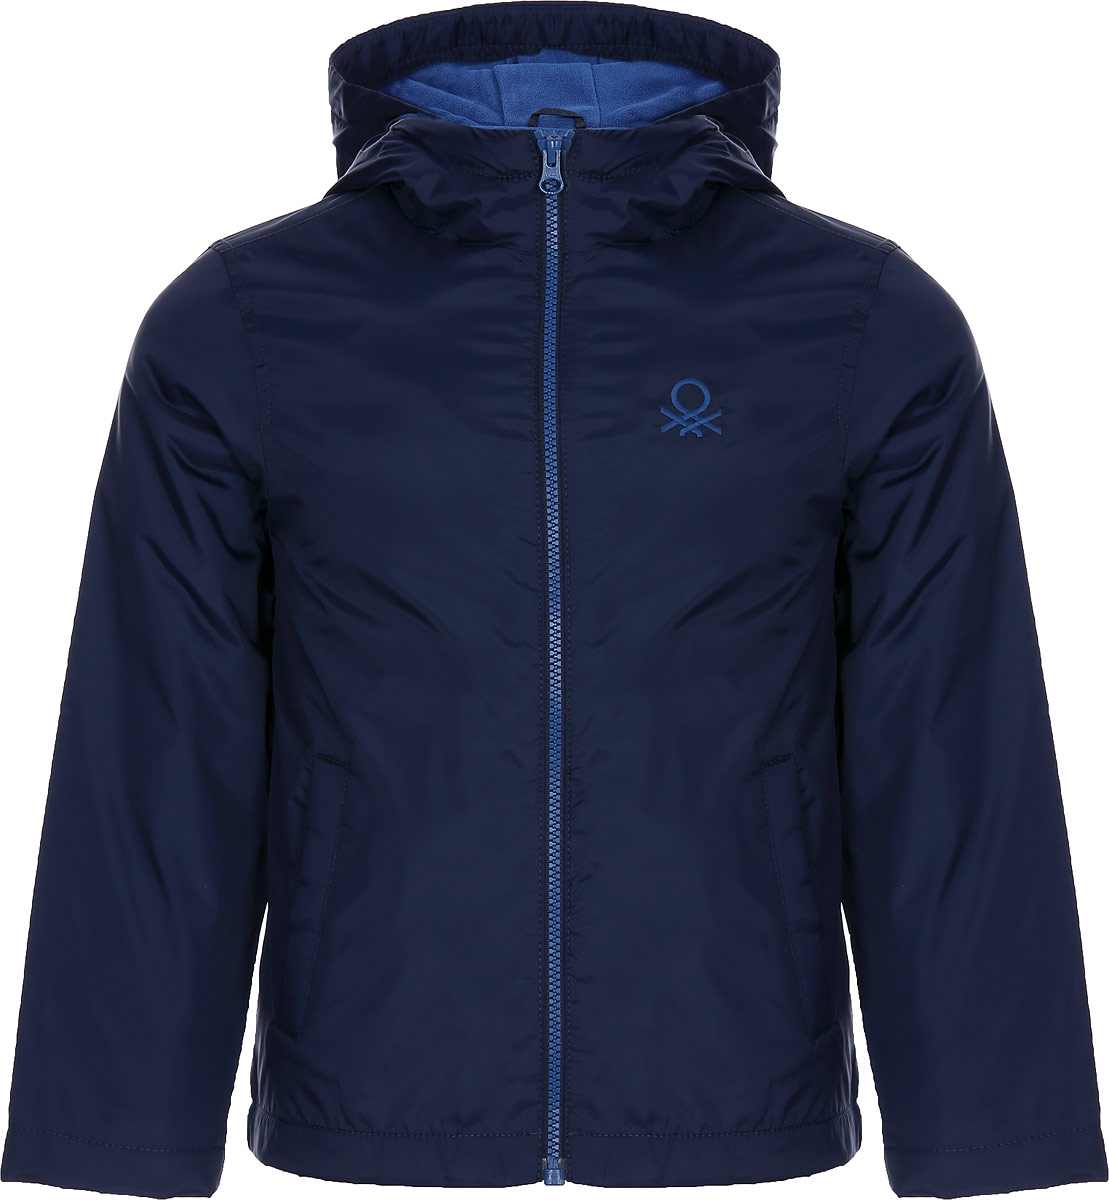 Куртка для мальчика United Colors of Benetton, цвет: синий. 2BL553CM0_13C. Размер 140